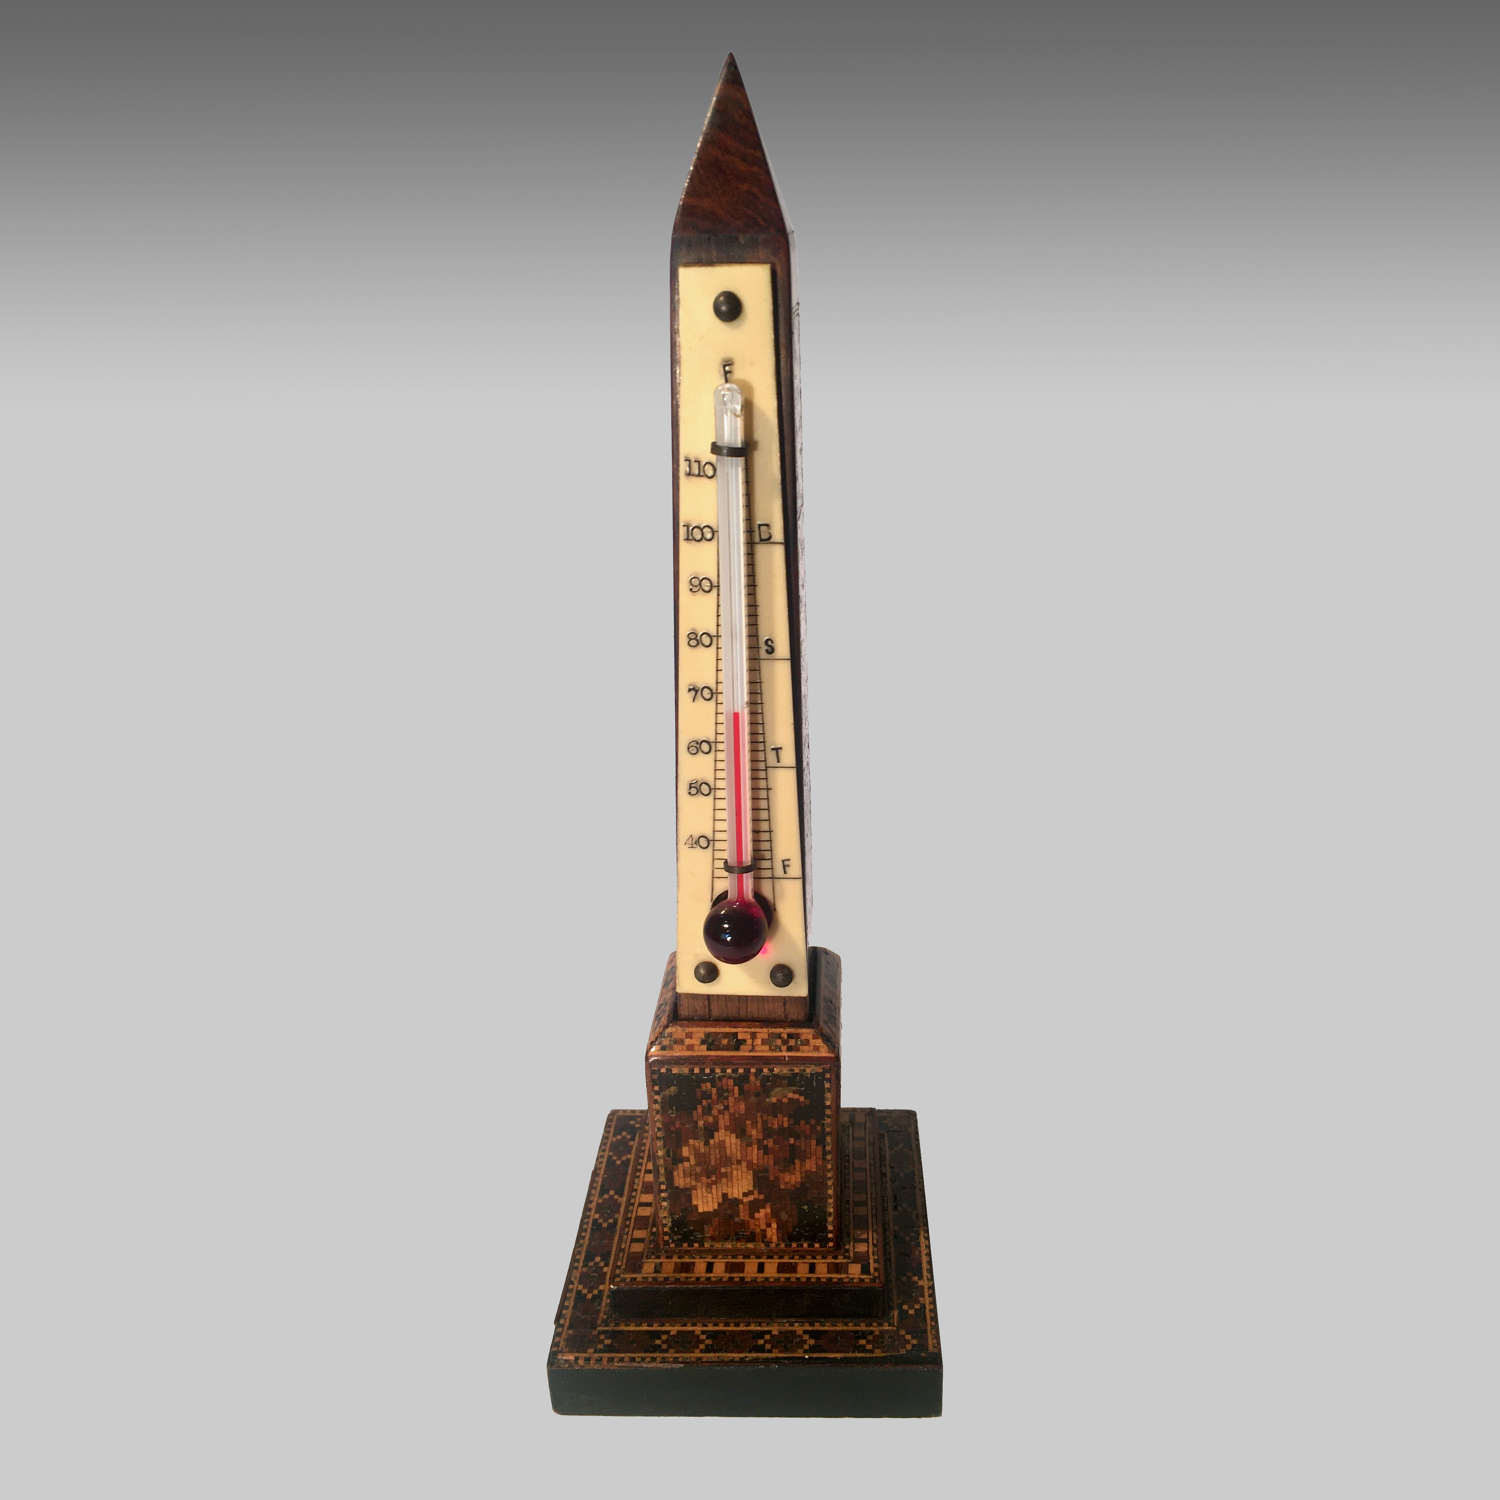 19th century Tunbridge Ware Cleopatra's Needle thermometer